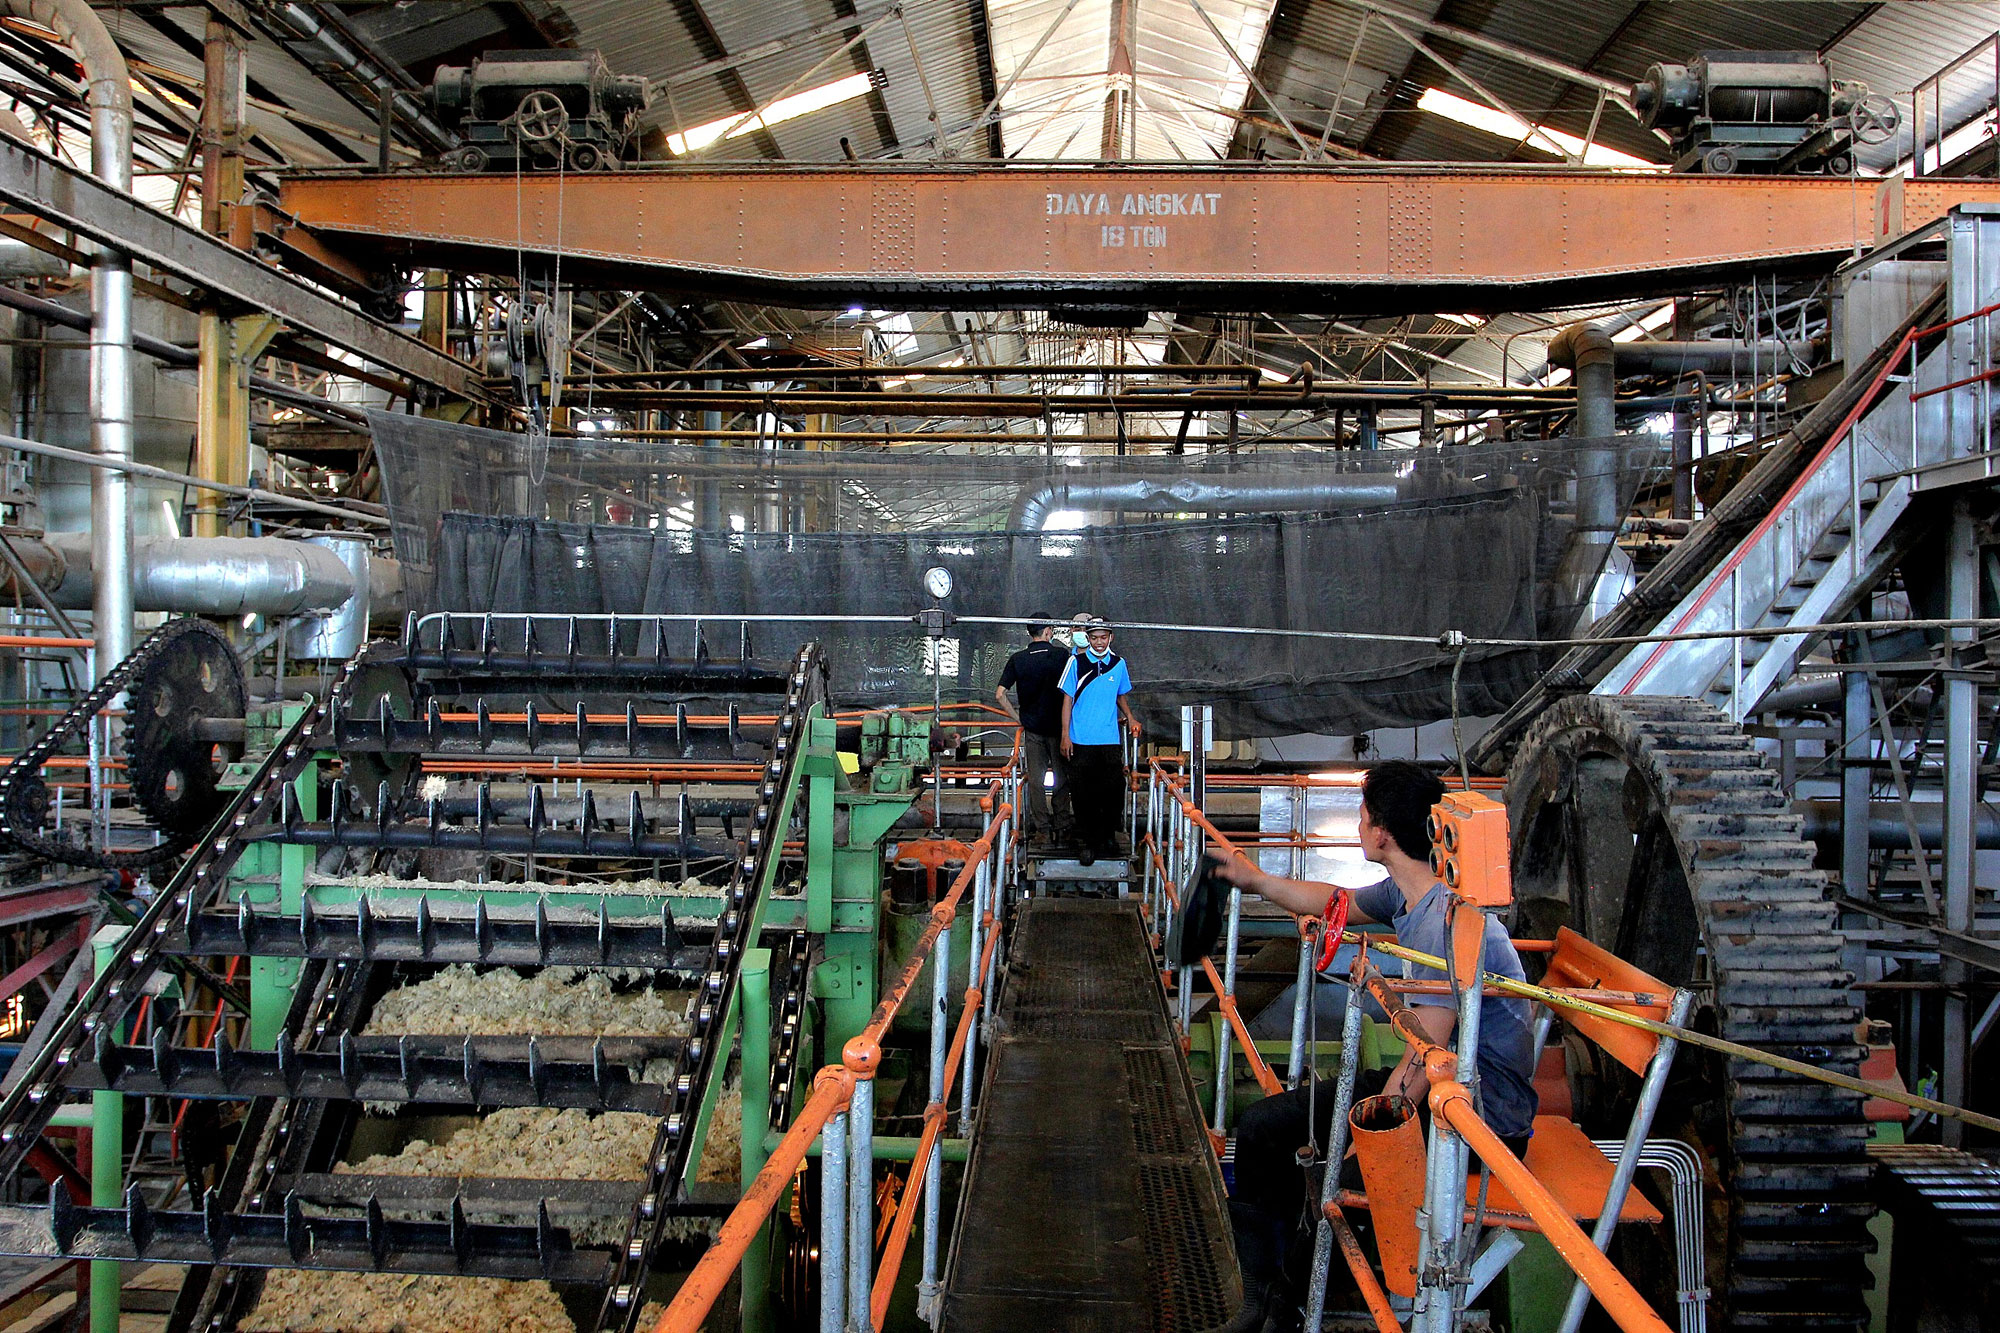 Menengok Pabrik Gula Sindanglaut - Foto Katadata.co.id